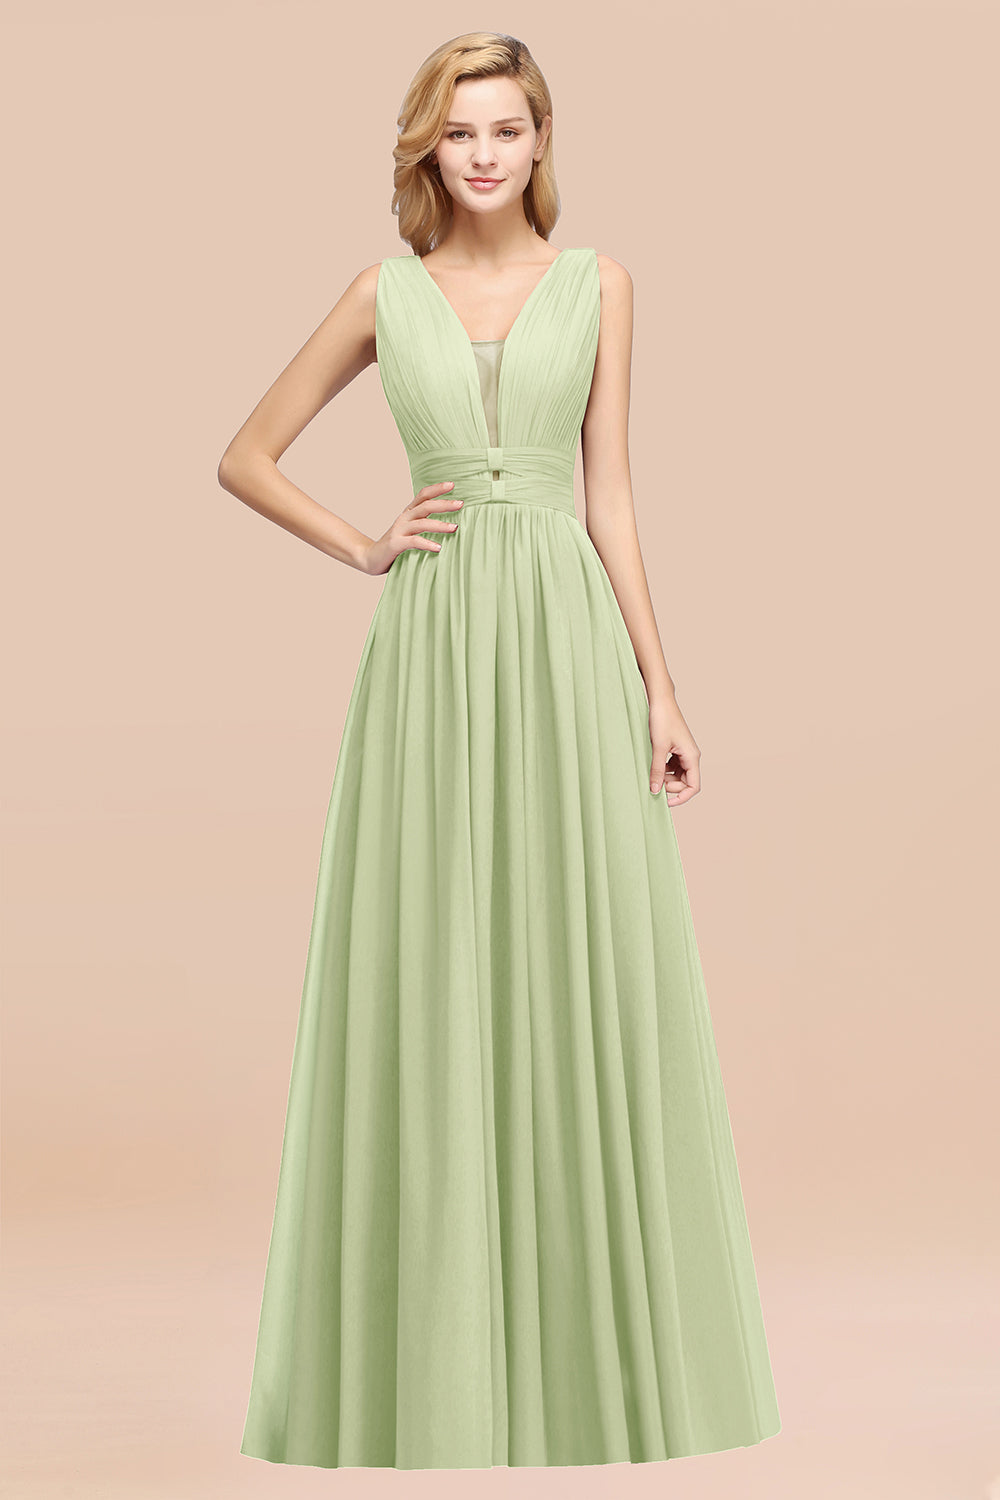 Modest Dark Green Long Bridesmaid Dress Deep V-Neck Chiffon Maid of Honor Dress-27dress